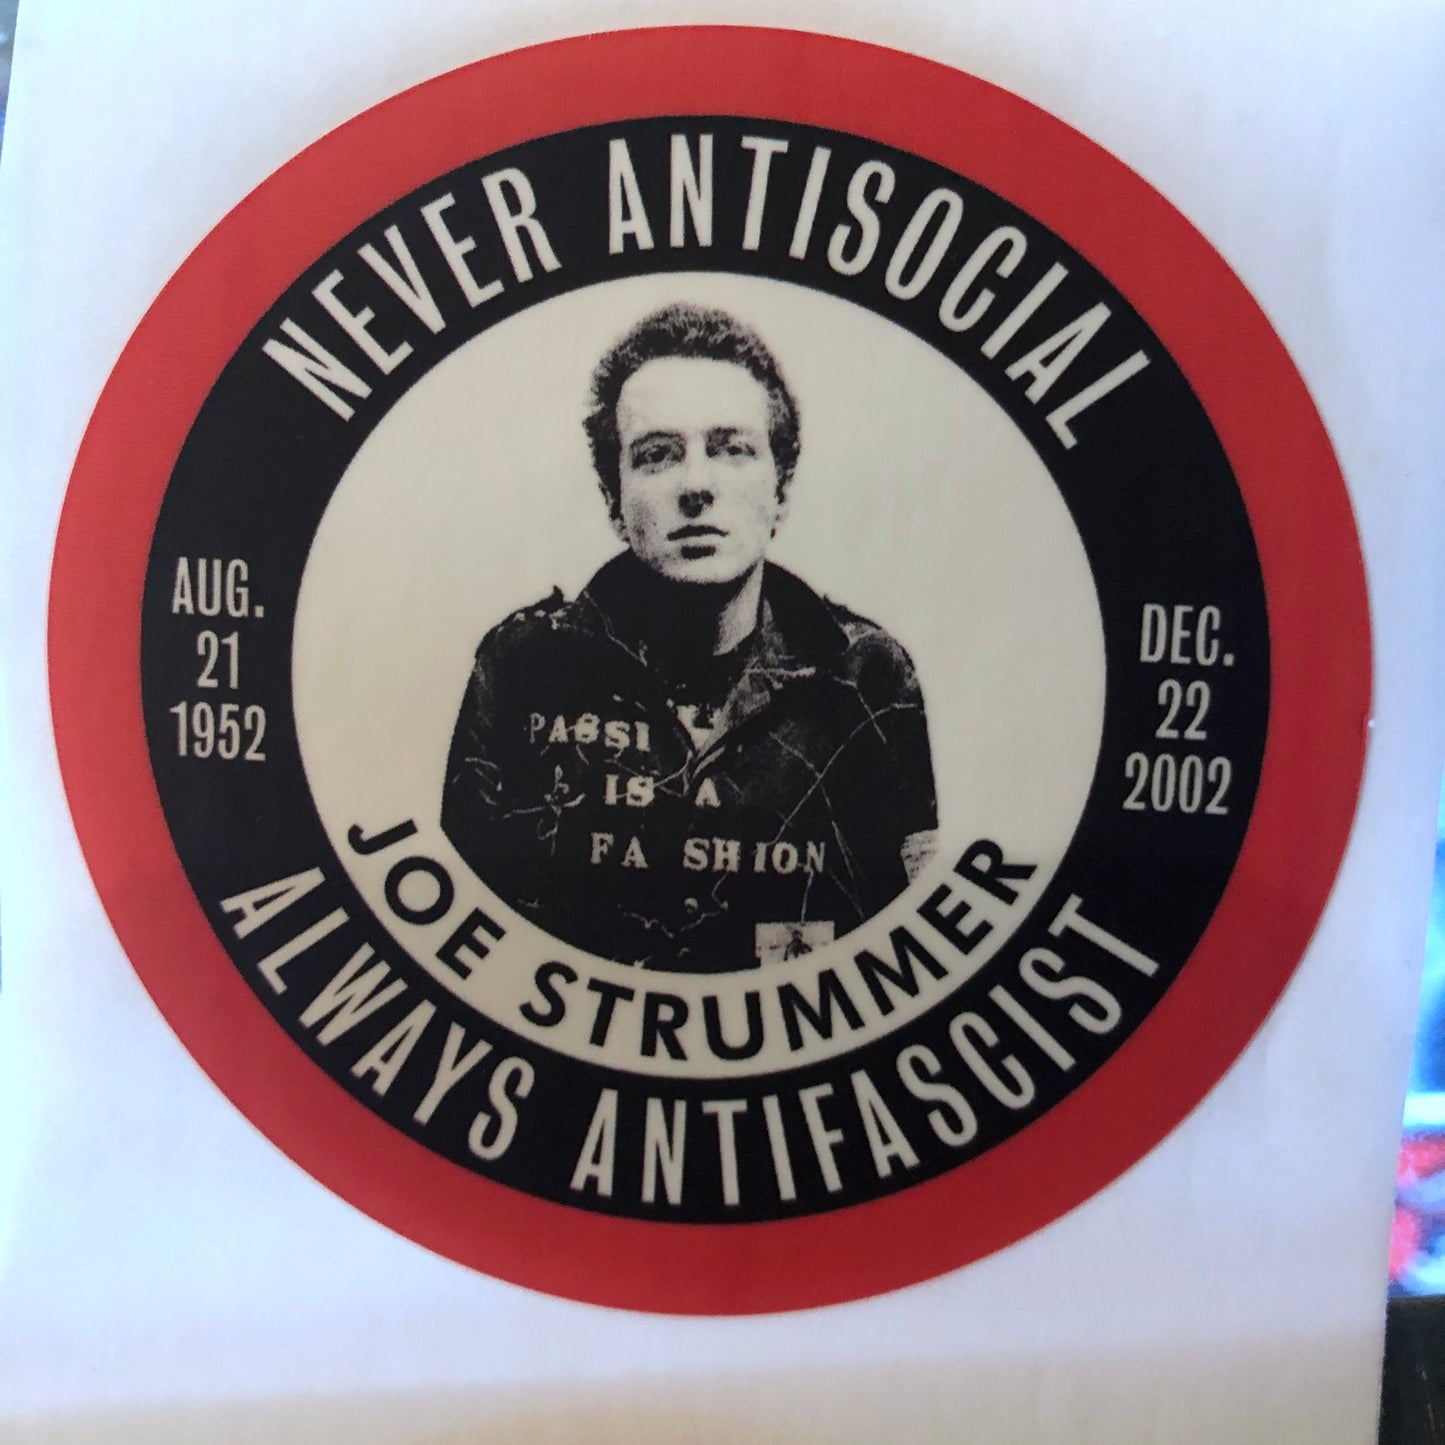 Stealworks "Never Antisocial Always Antifascist" Sticker